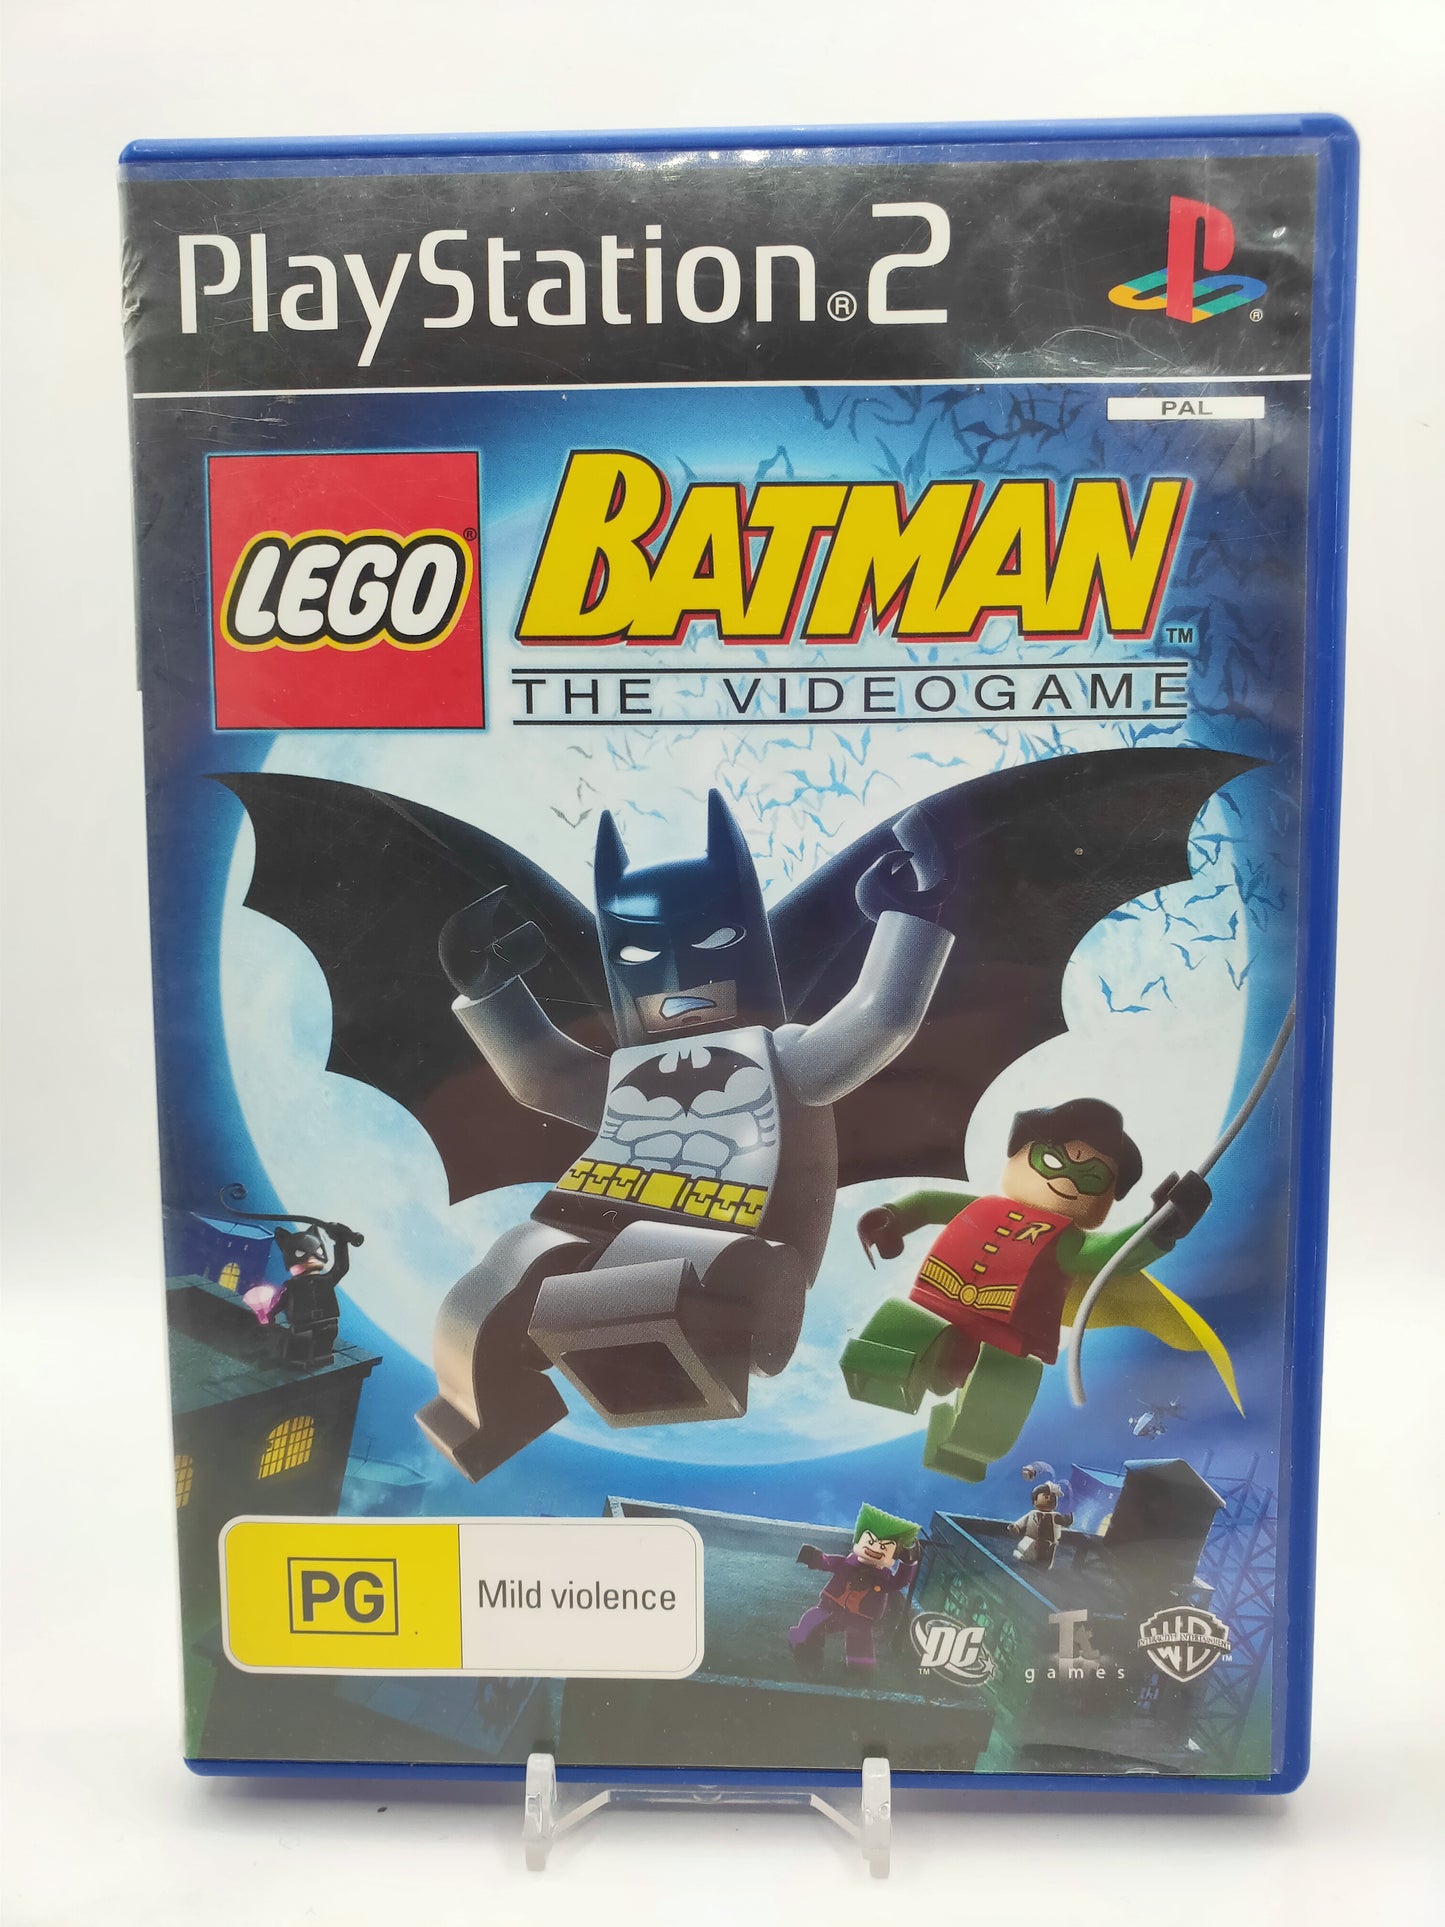 Lego Batman The Videogame PS2